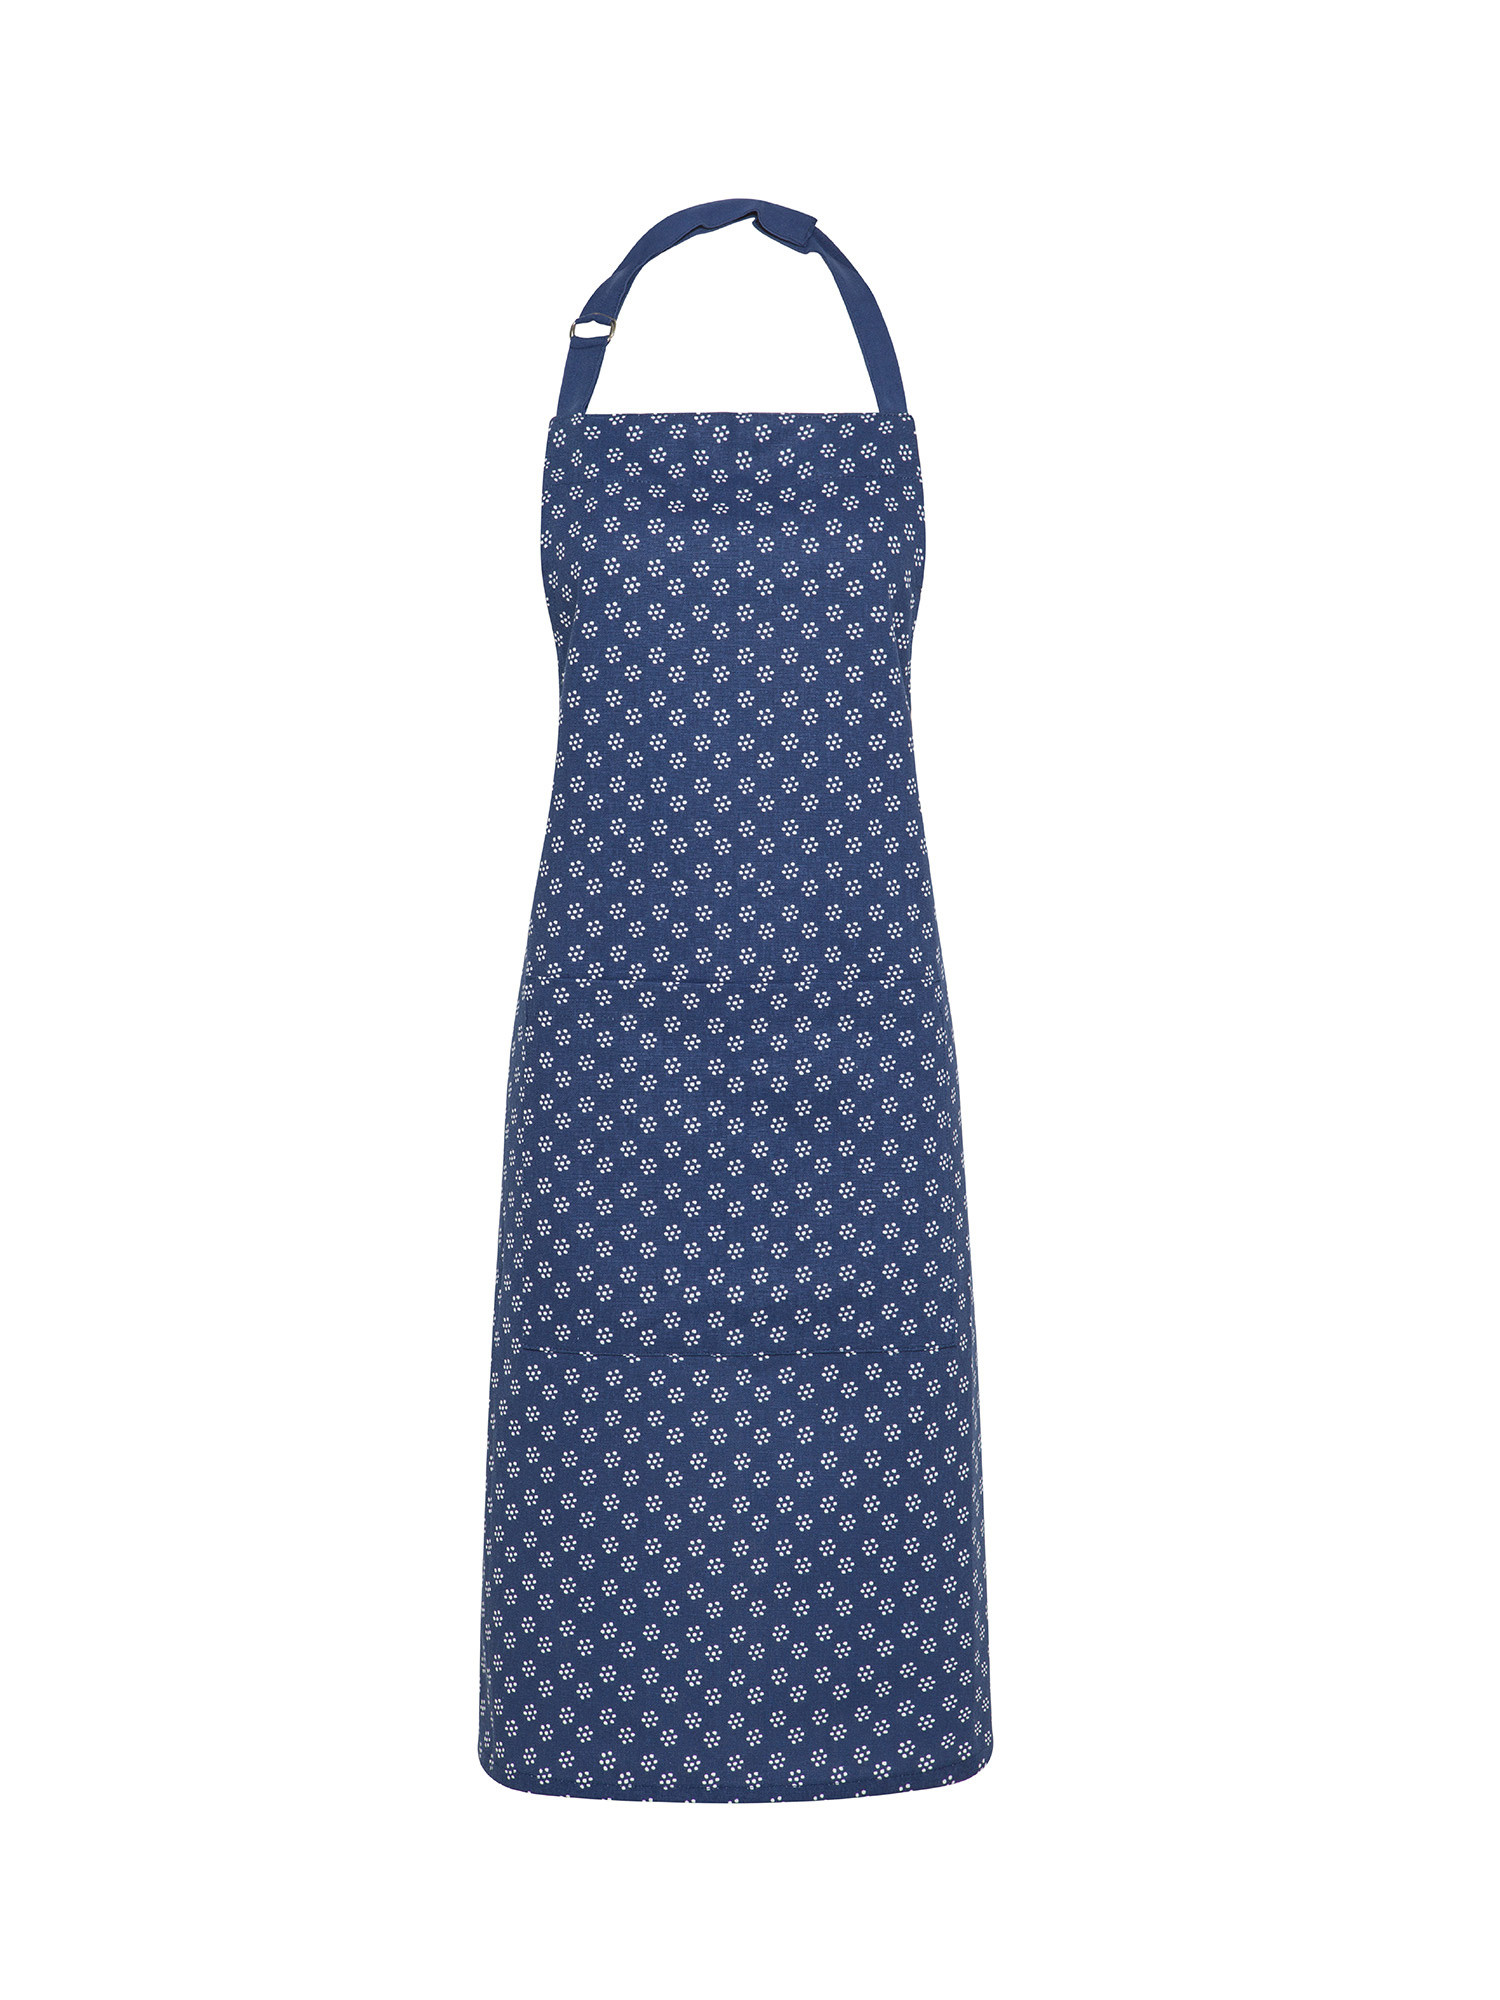 Grembiule da cucina puro cotone stampa dots, Blu, large image number 0